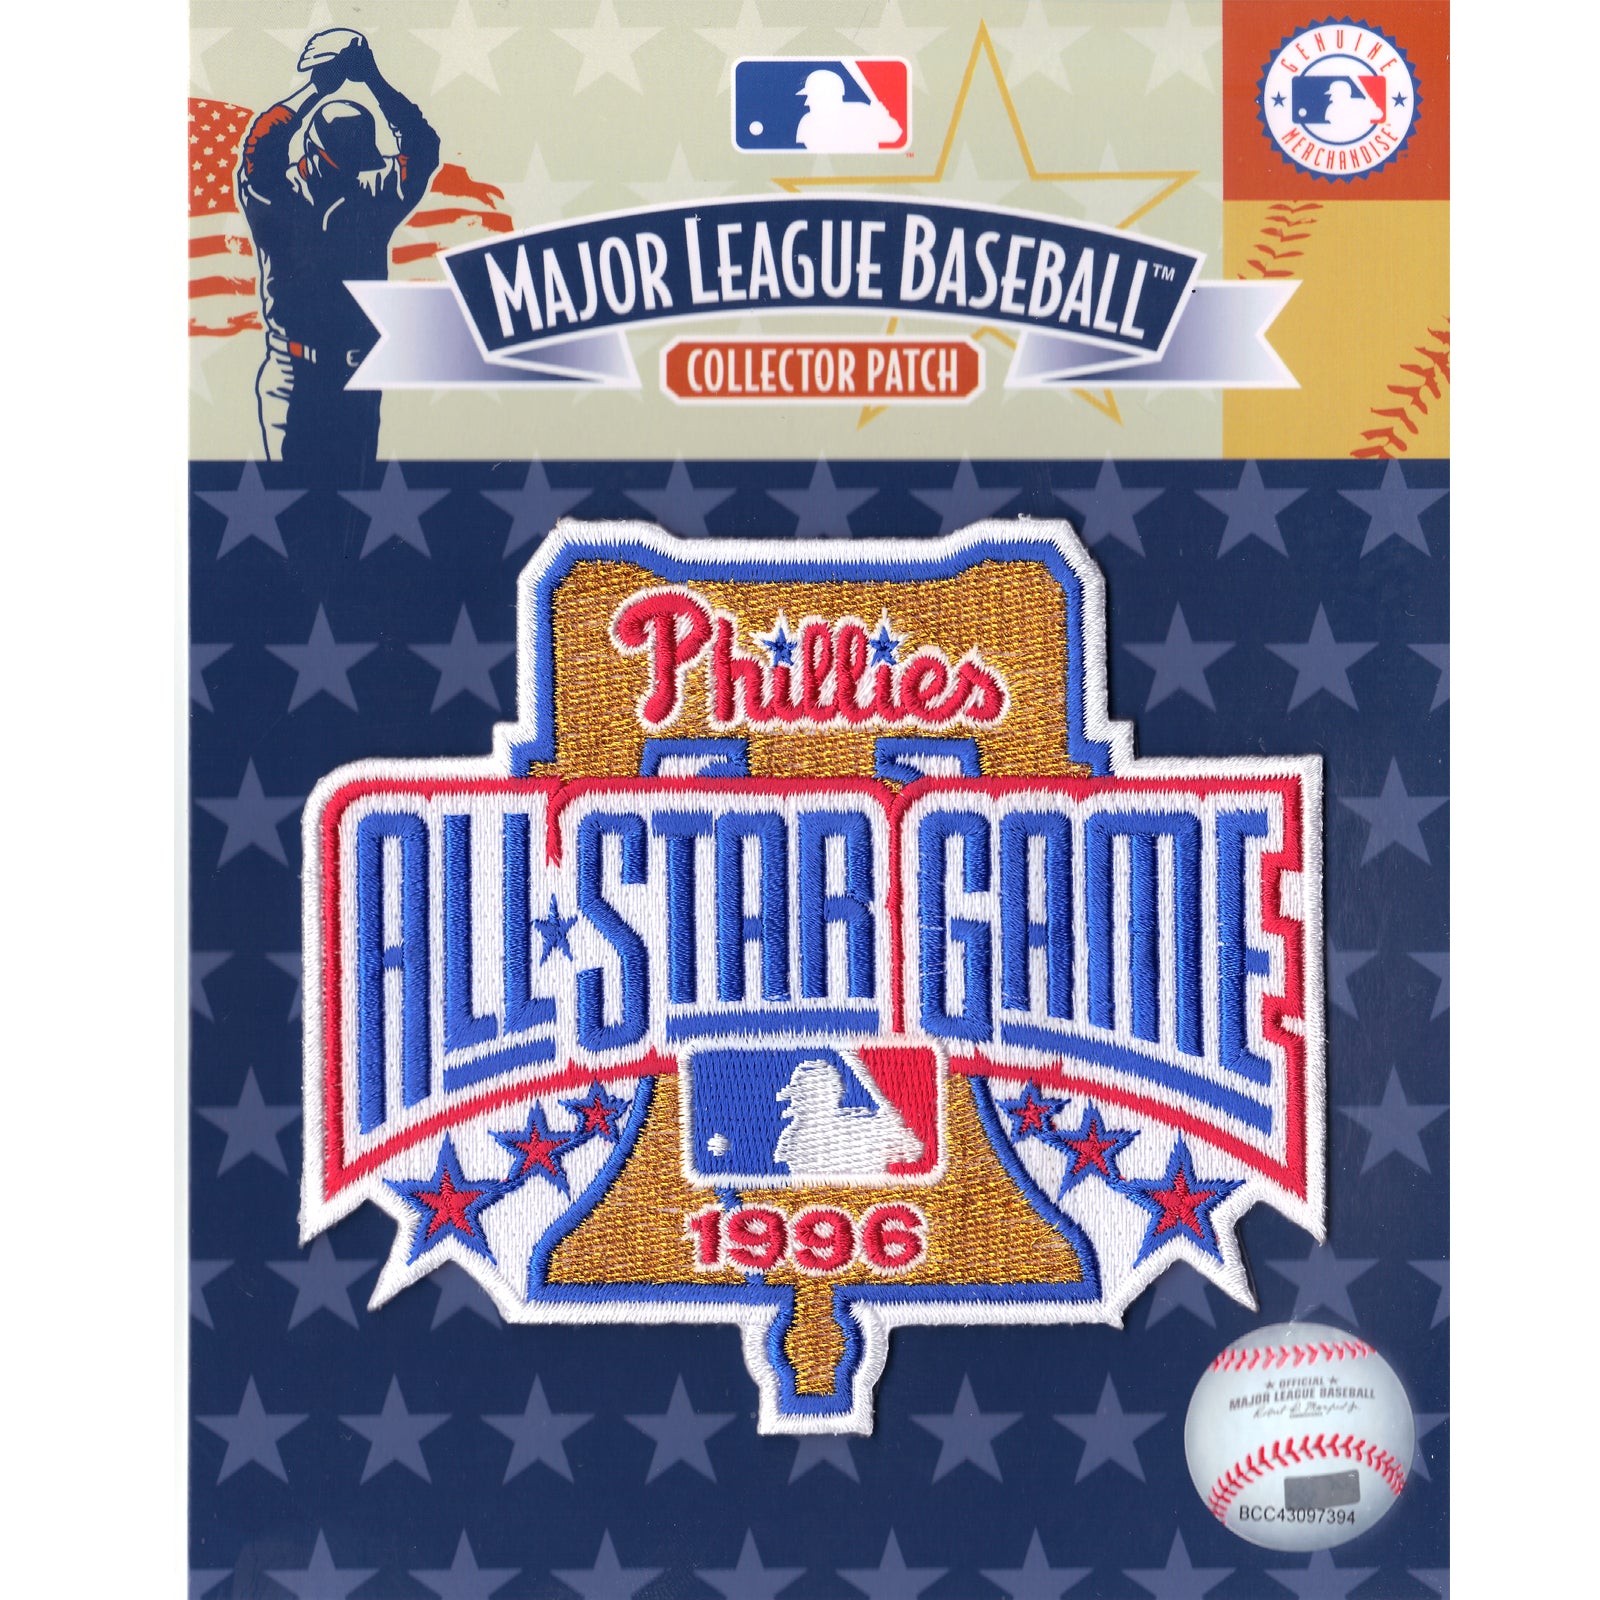 AP Source 2026 MLB AllStar Game to be held in Philadelphia